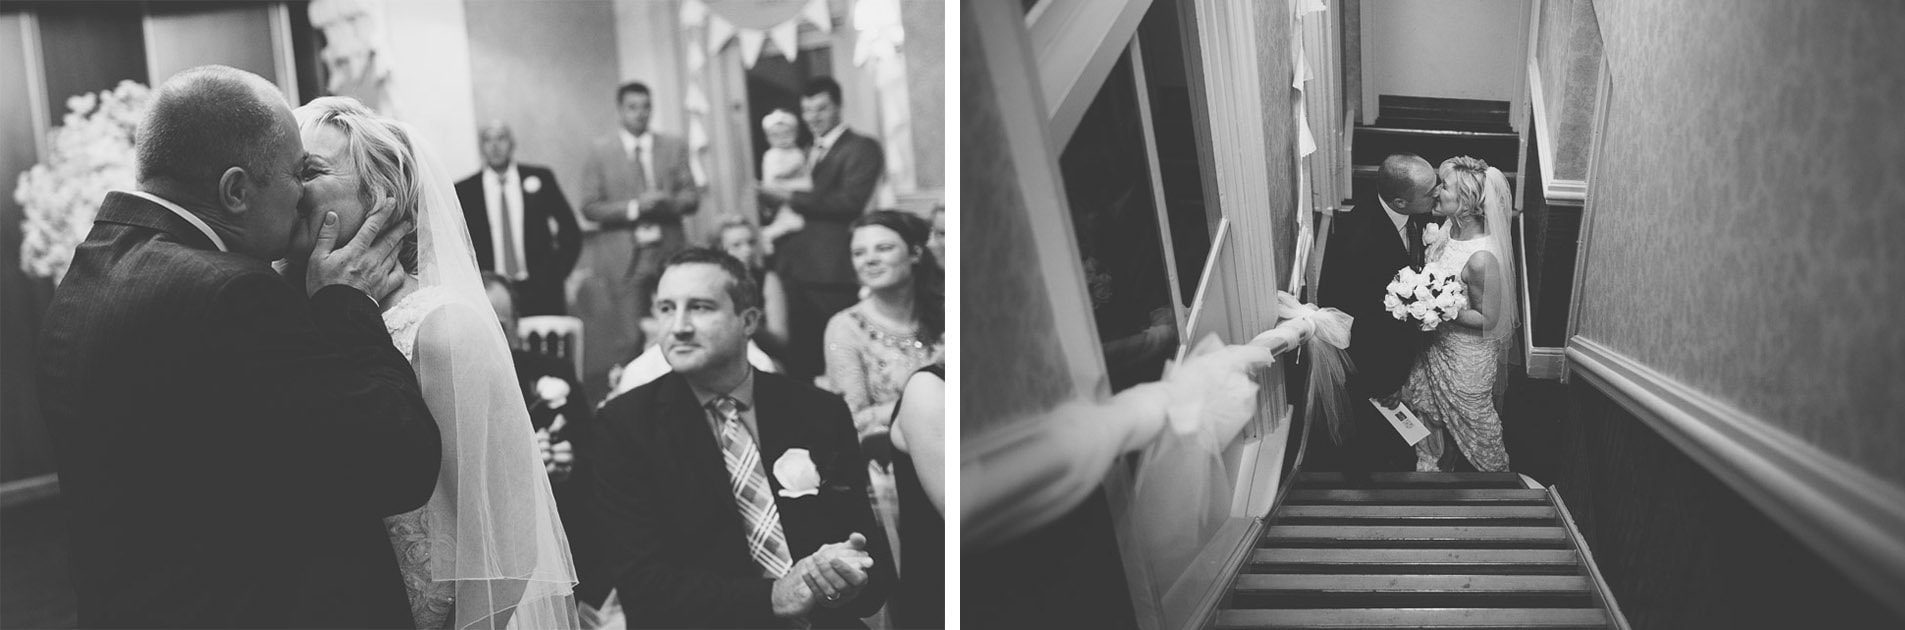 Wedding-Photography-Ealing-Drayton-Court-Hotel-London-Kiss